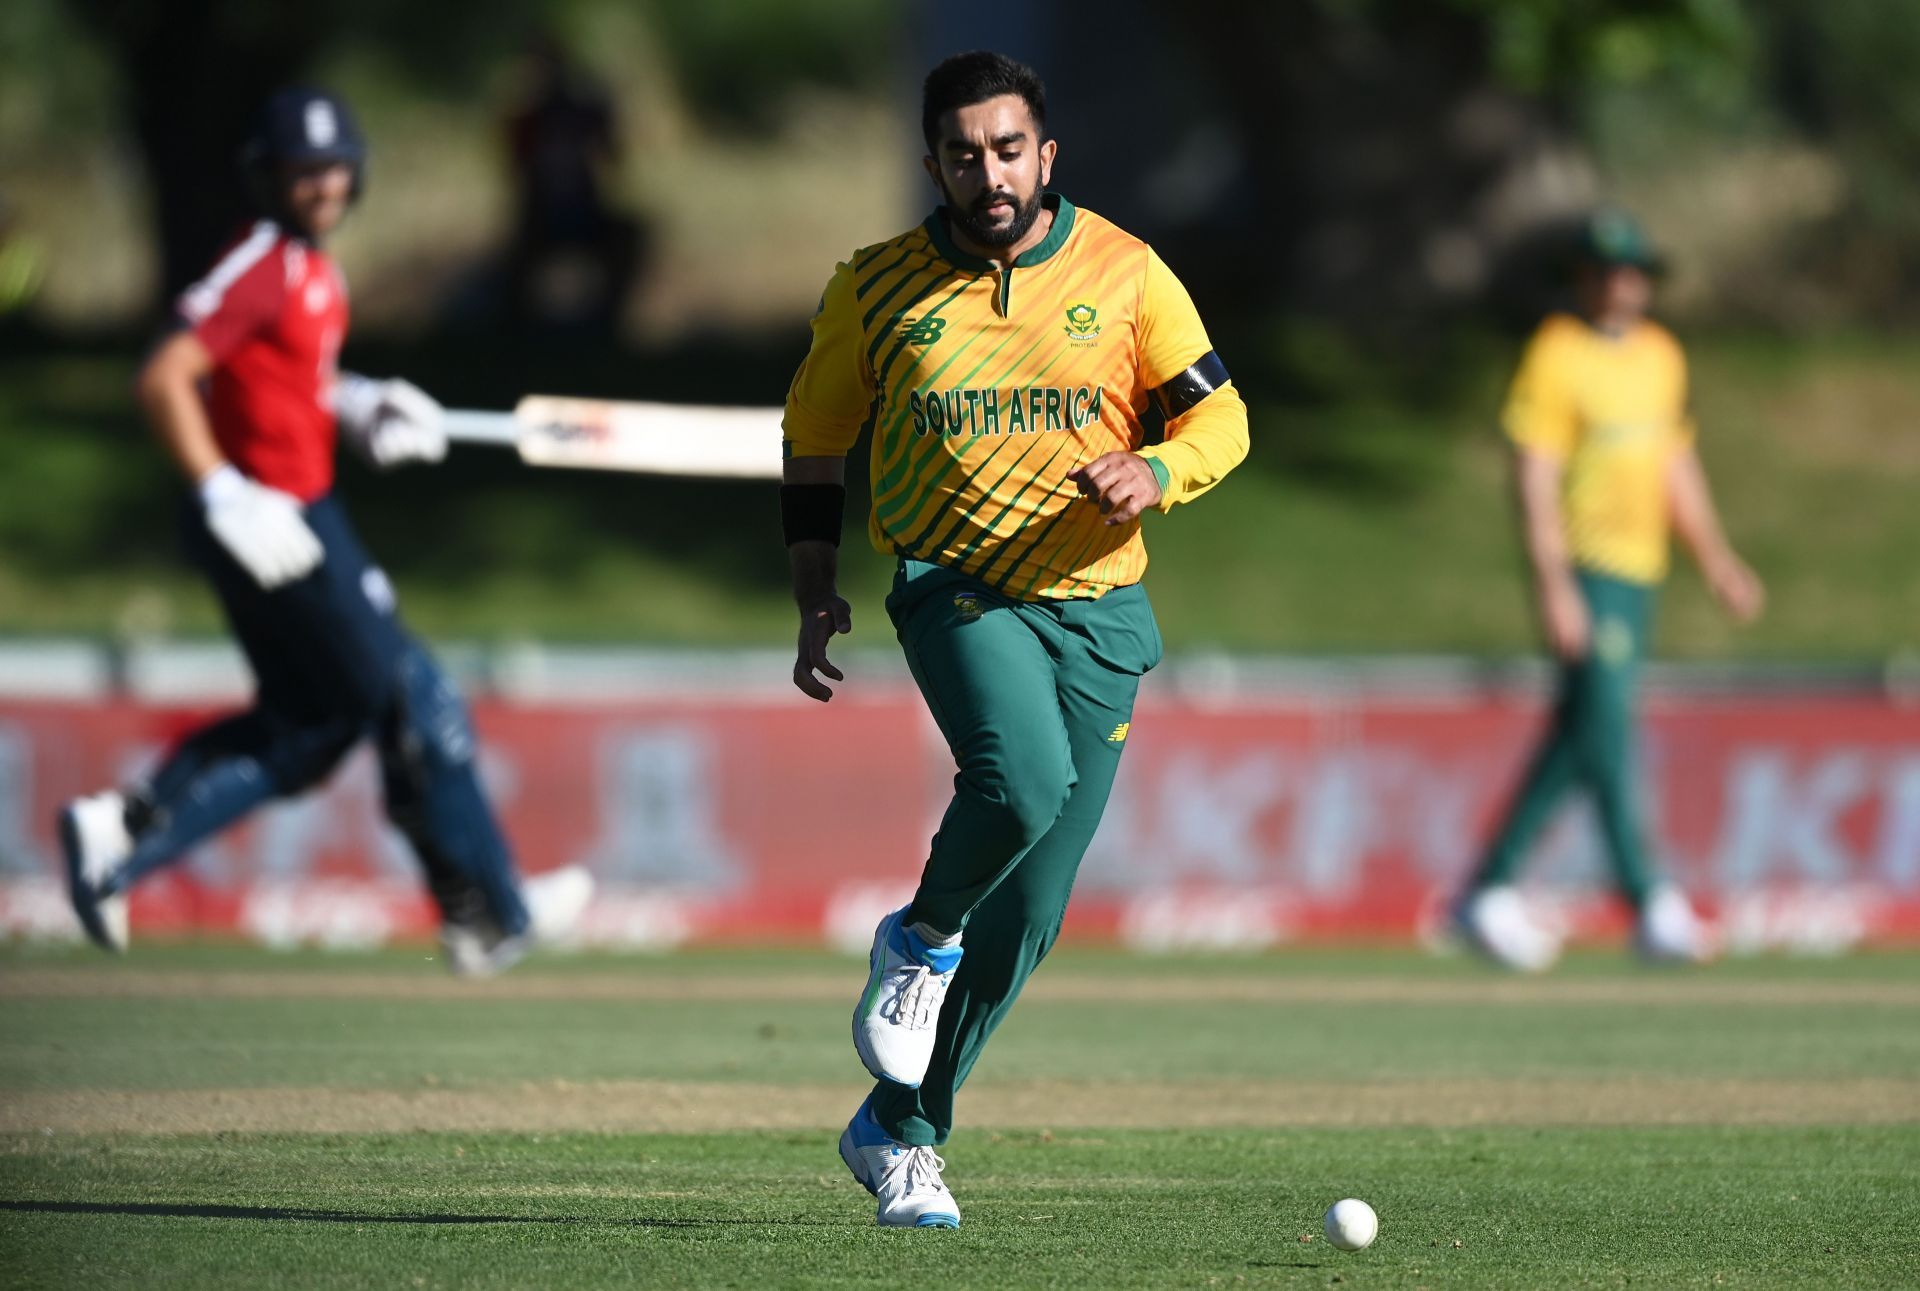 Tabraiz Shamsi will play a key role against a Windies side that struggled against spin